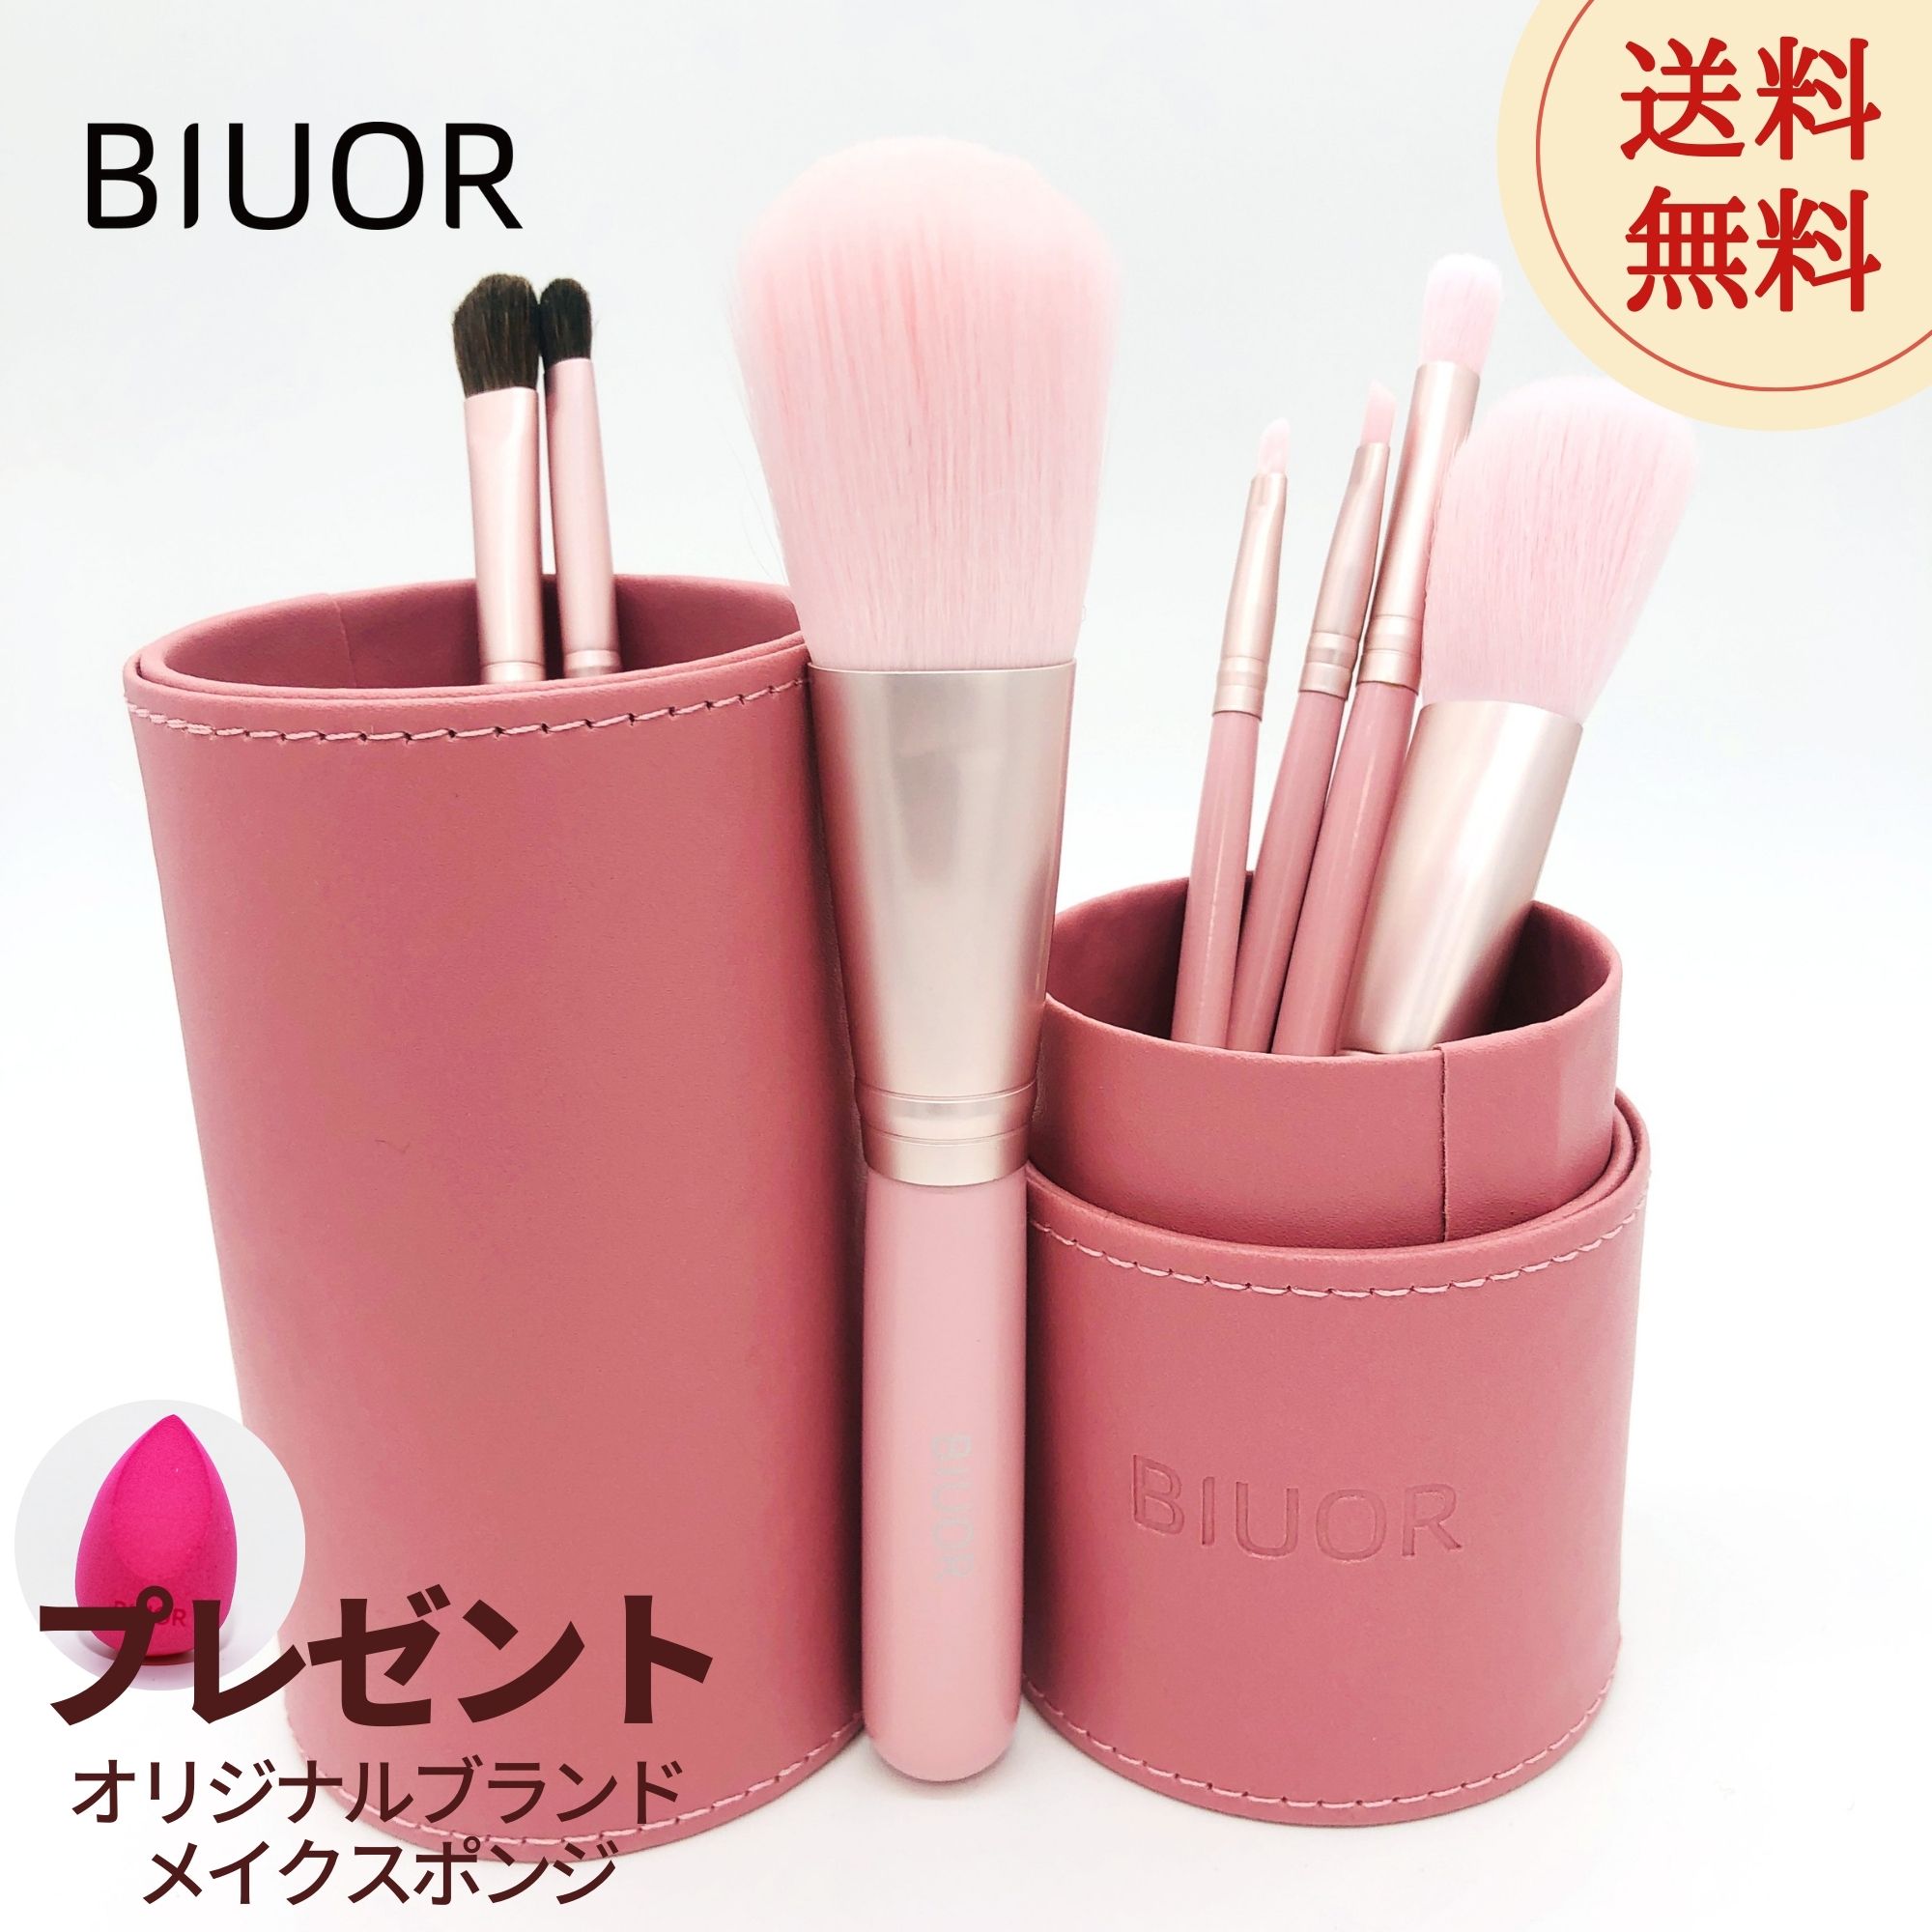 BIUOR 7本ピンク色メイクブラシセット 円型メイクブラシ立て付 化粧ブラシ 高級タクロン 毛量たっぷり 超柔らかい